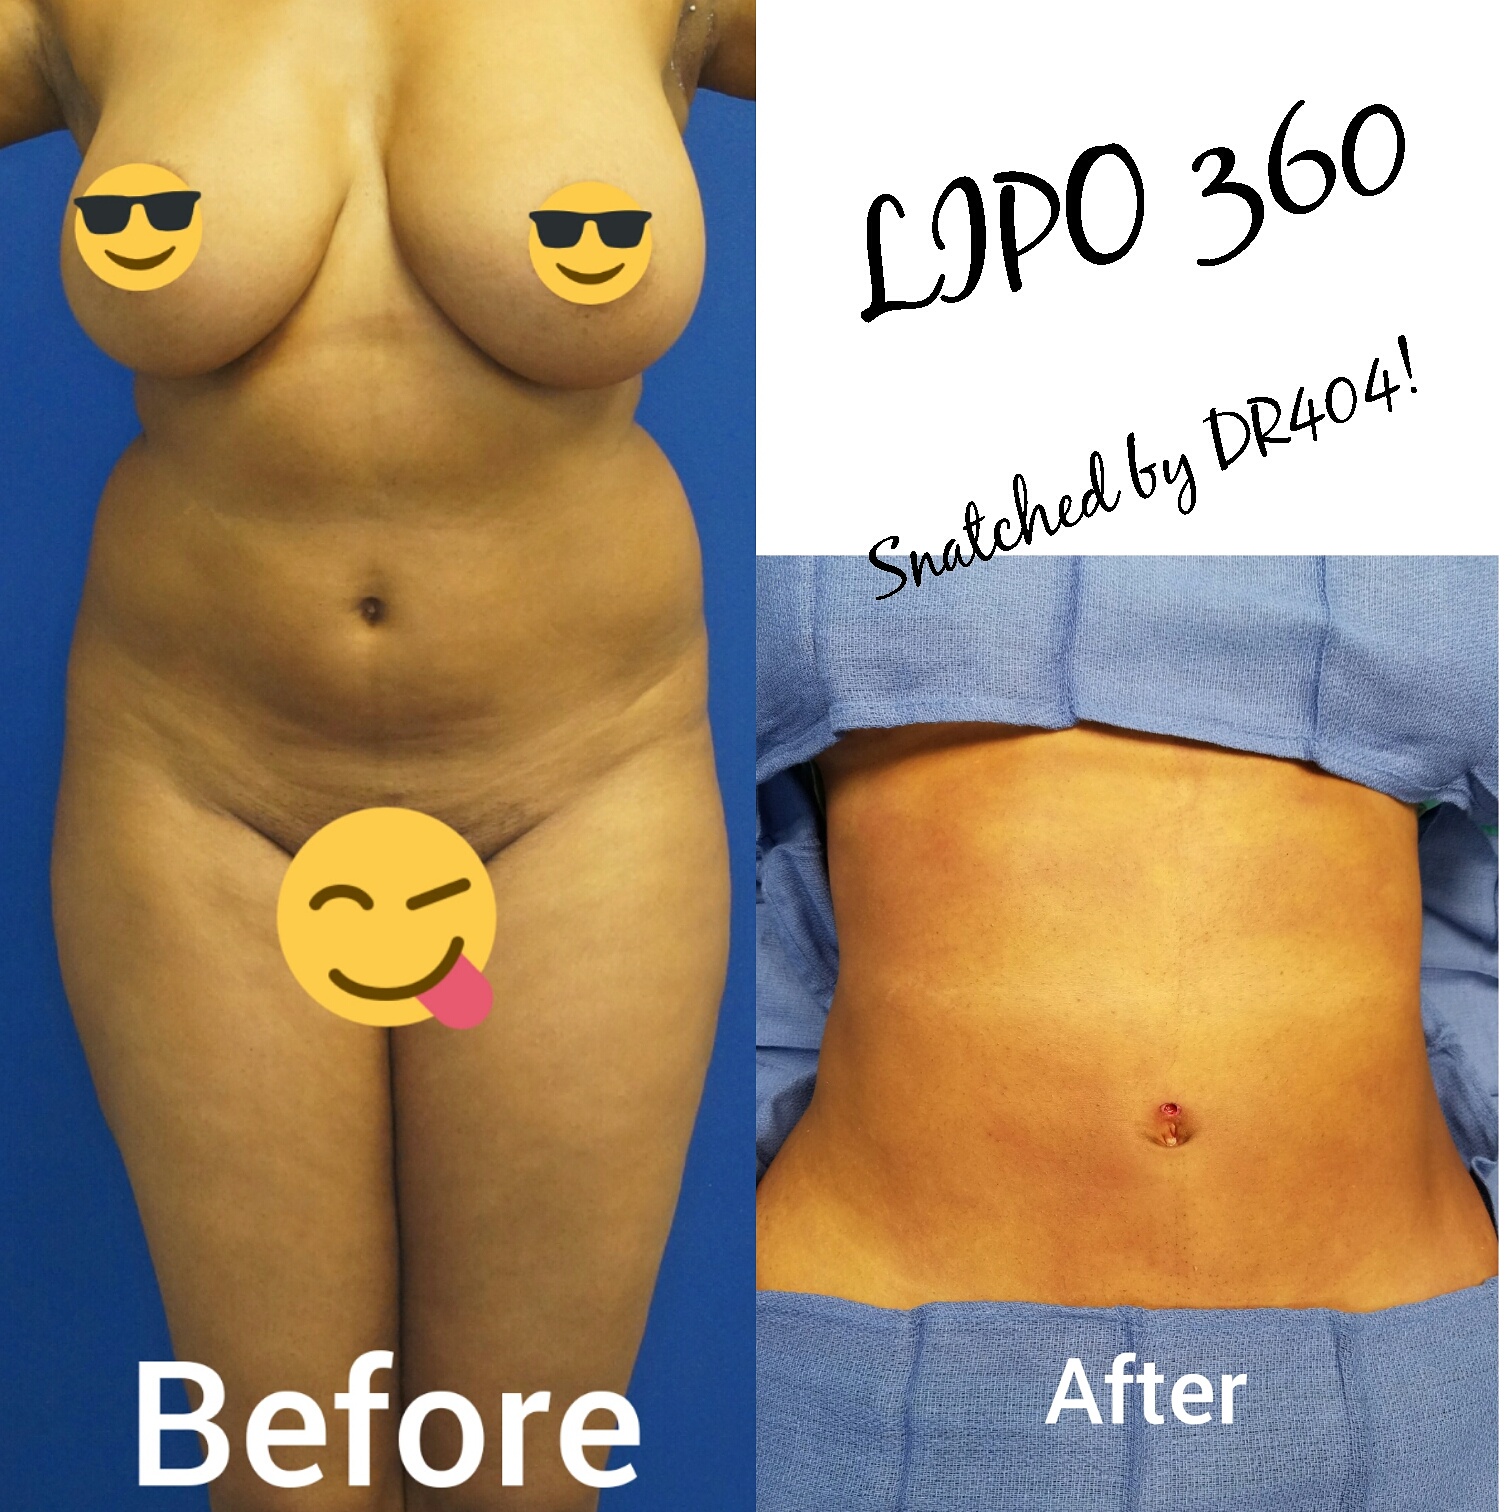 liposuction surgery, laser lipo, smart lipoAtlanta liposuction, liposuction atlanta, atlanta brazilian butt lift, brazilian butt lift atlanta, therealdrmiami, drmiami, dr404, atlanta tummy tuck, tummy tuck atlanta, lipo360, liposuction360